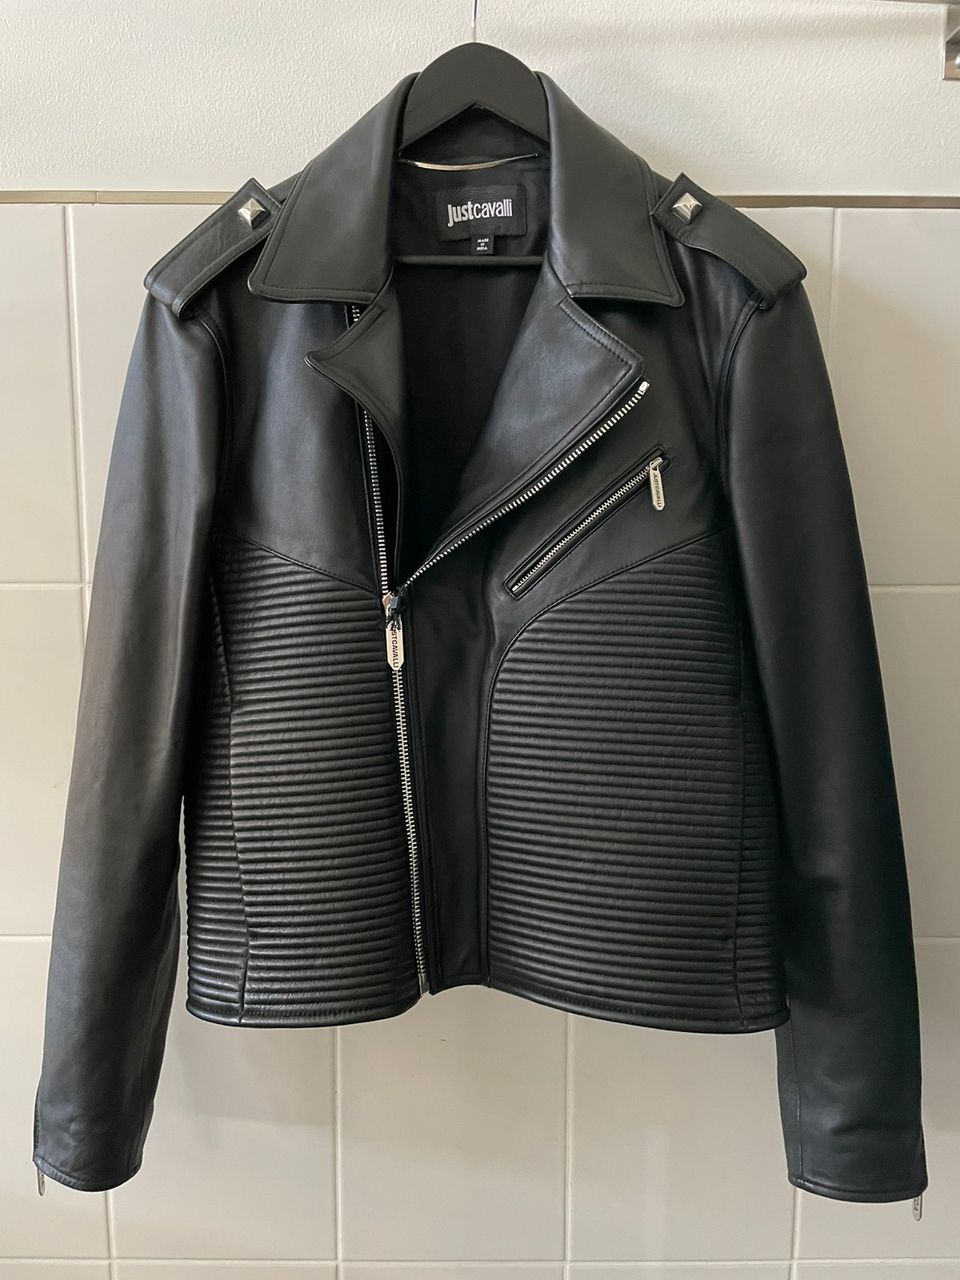 Just Cavalli ”zipped biker jacket” nahkatakki